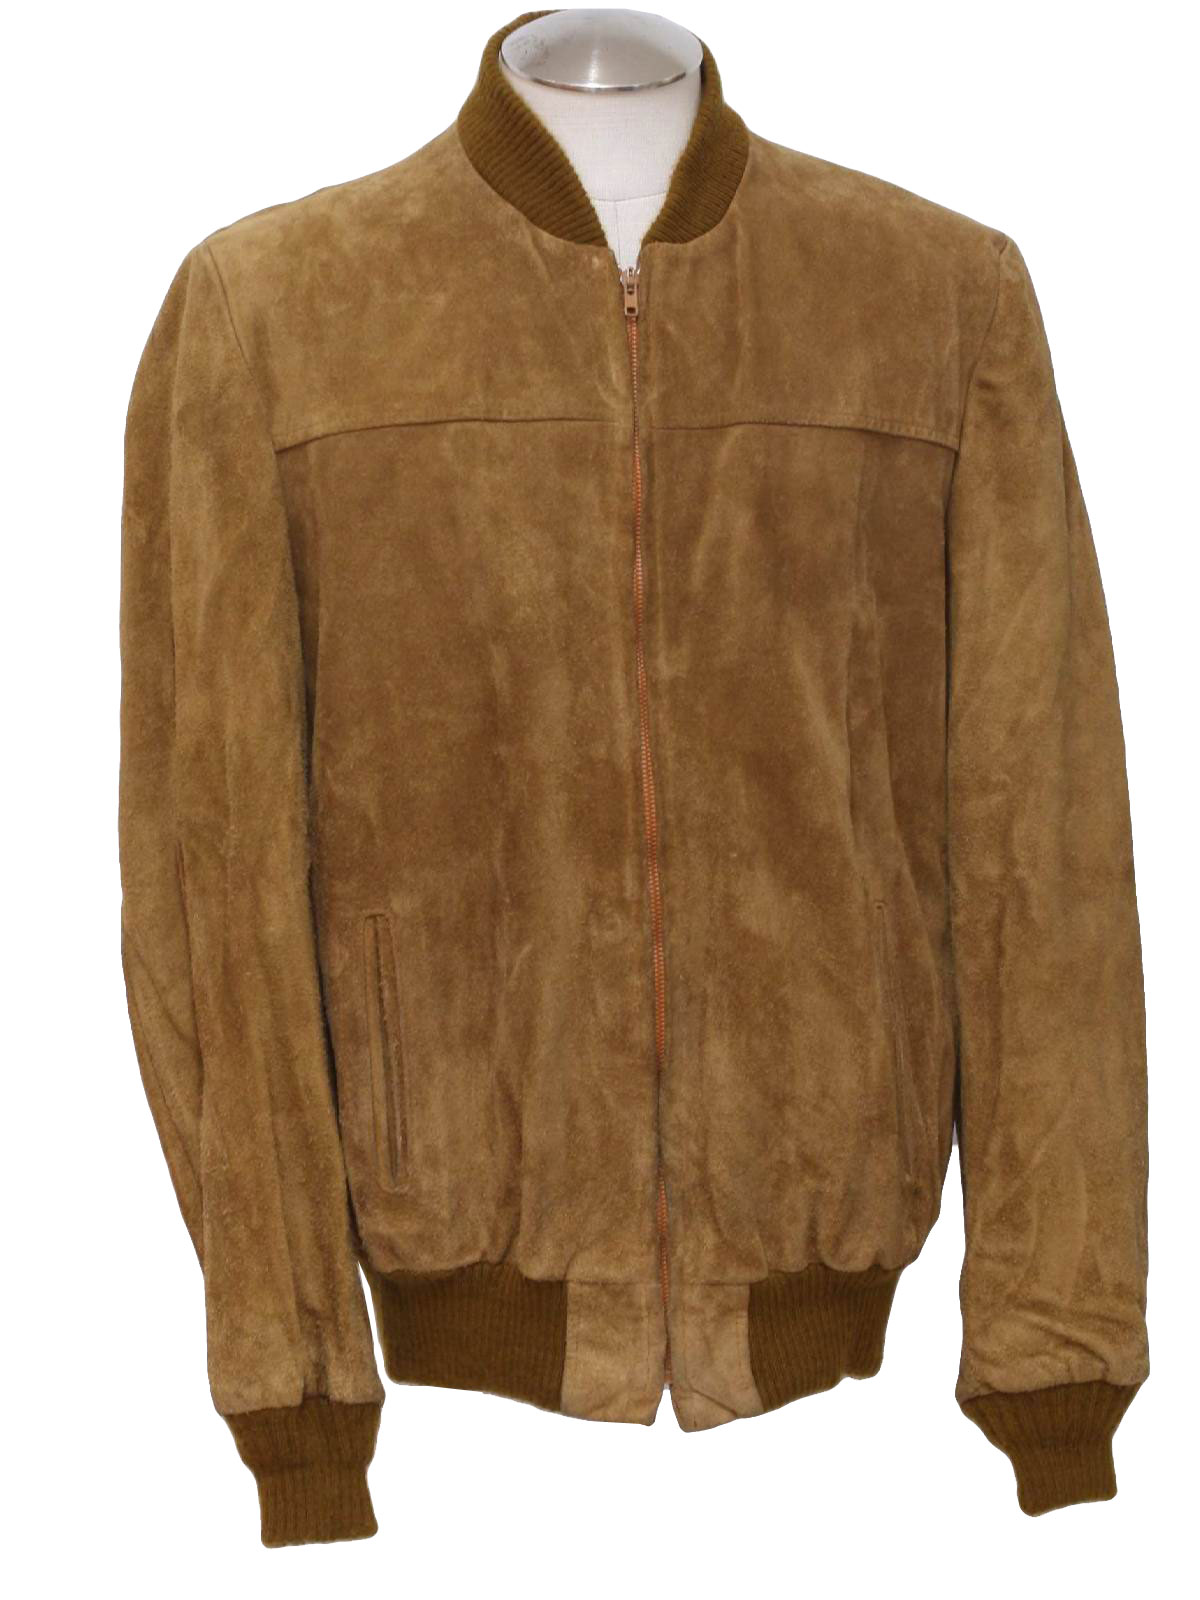 Retro Eighties Leather Jacket: 80s -J C Penney- Mens brown suede ...